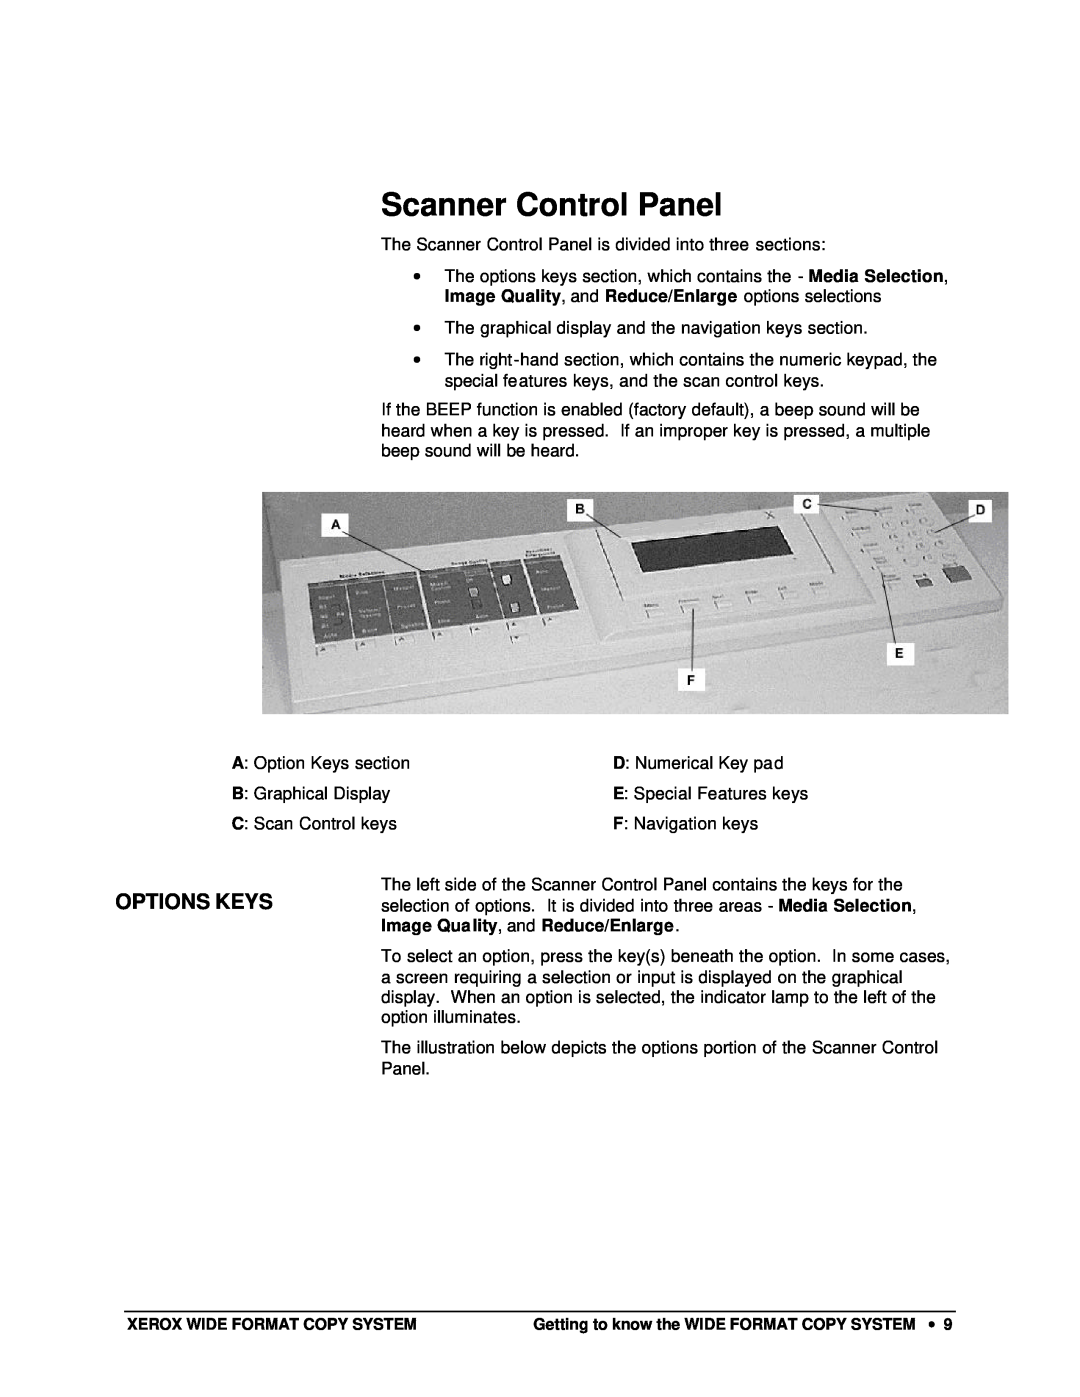 Xerox X2, 8825, 8850, 8830 manual Scanner Control Panel, Options Keys 